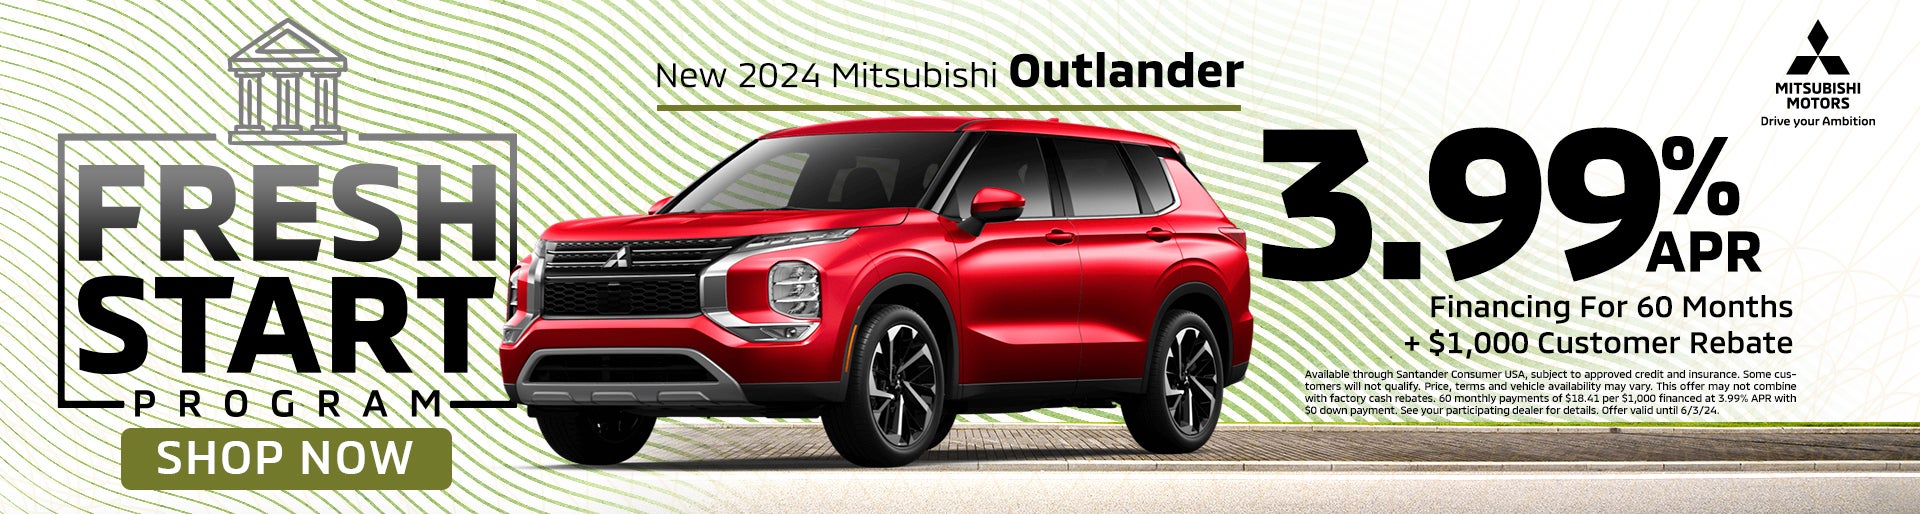 New 2024 Mitsubishi Outlander